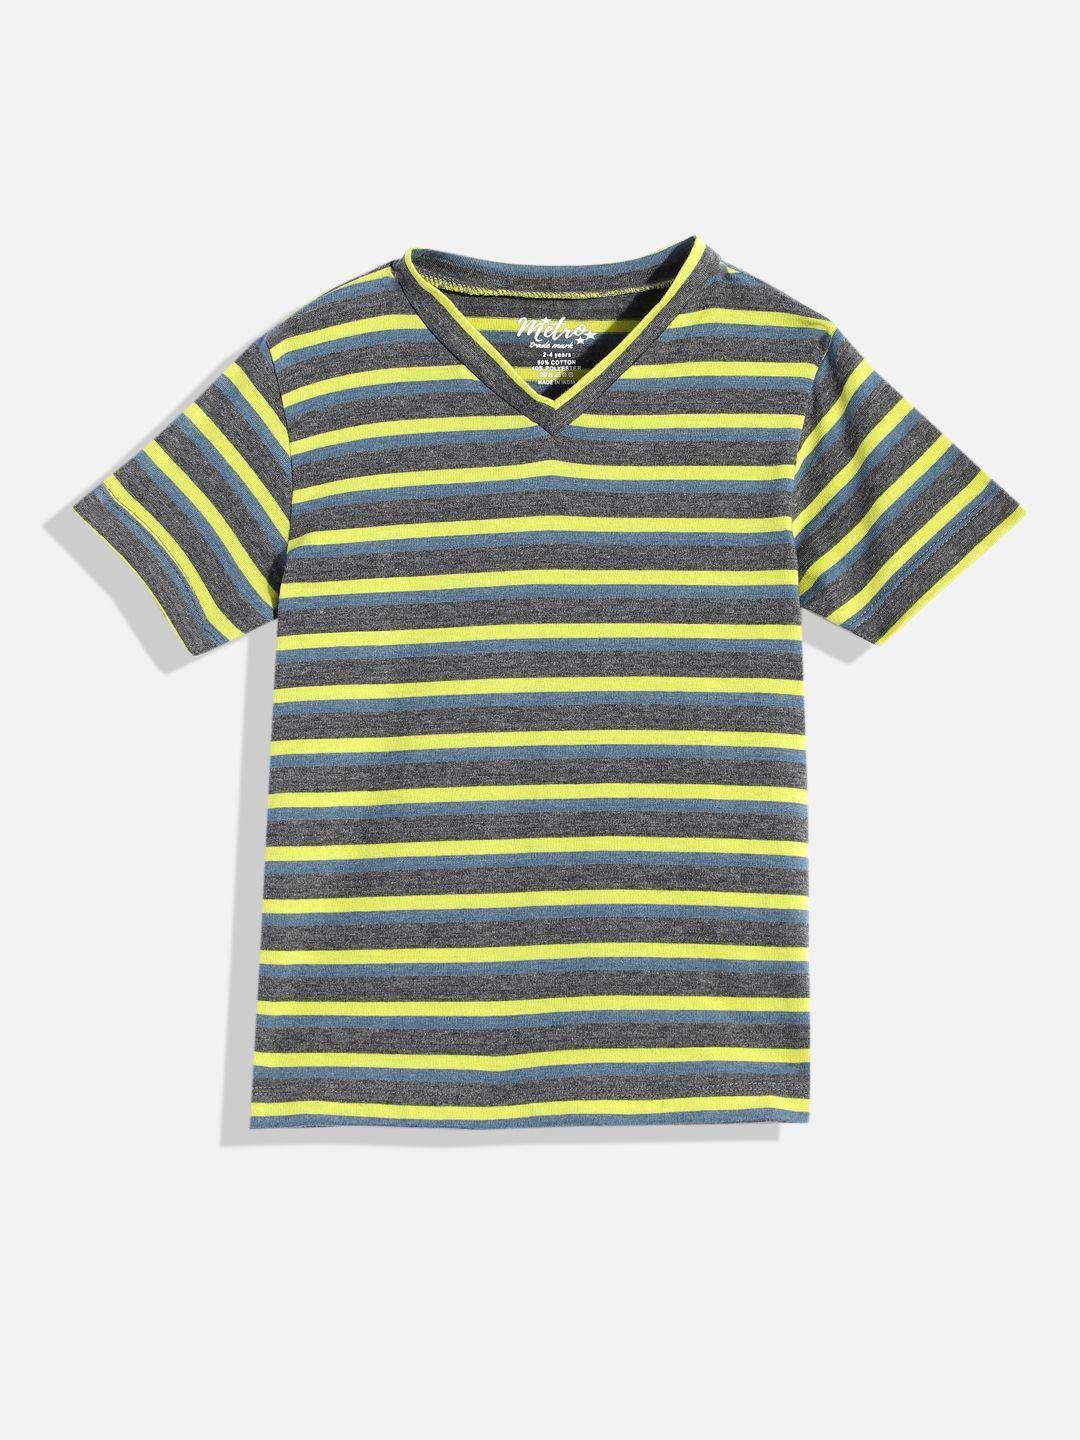 metro kids company boys grey & yellow striped v-neck t-shirt